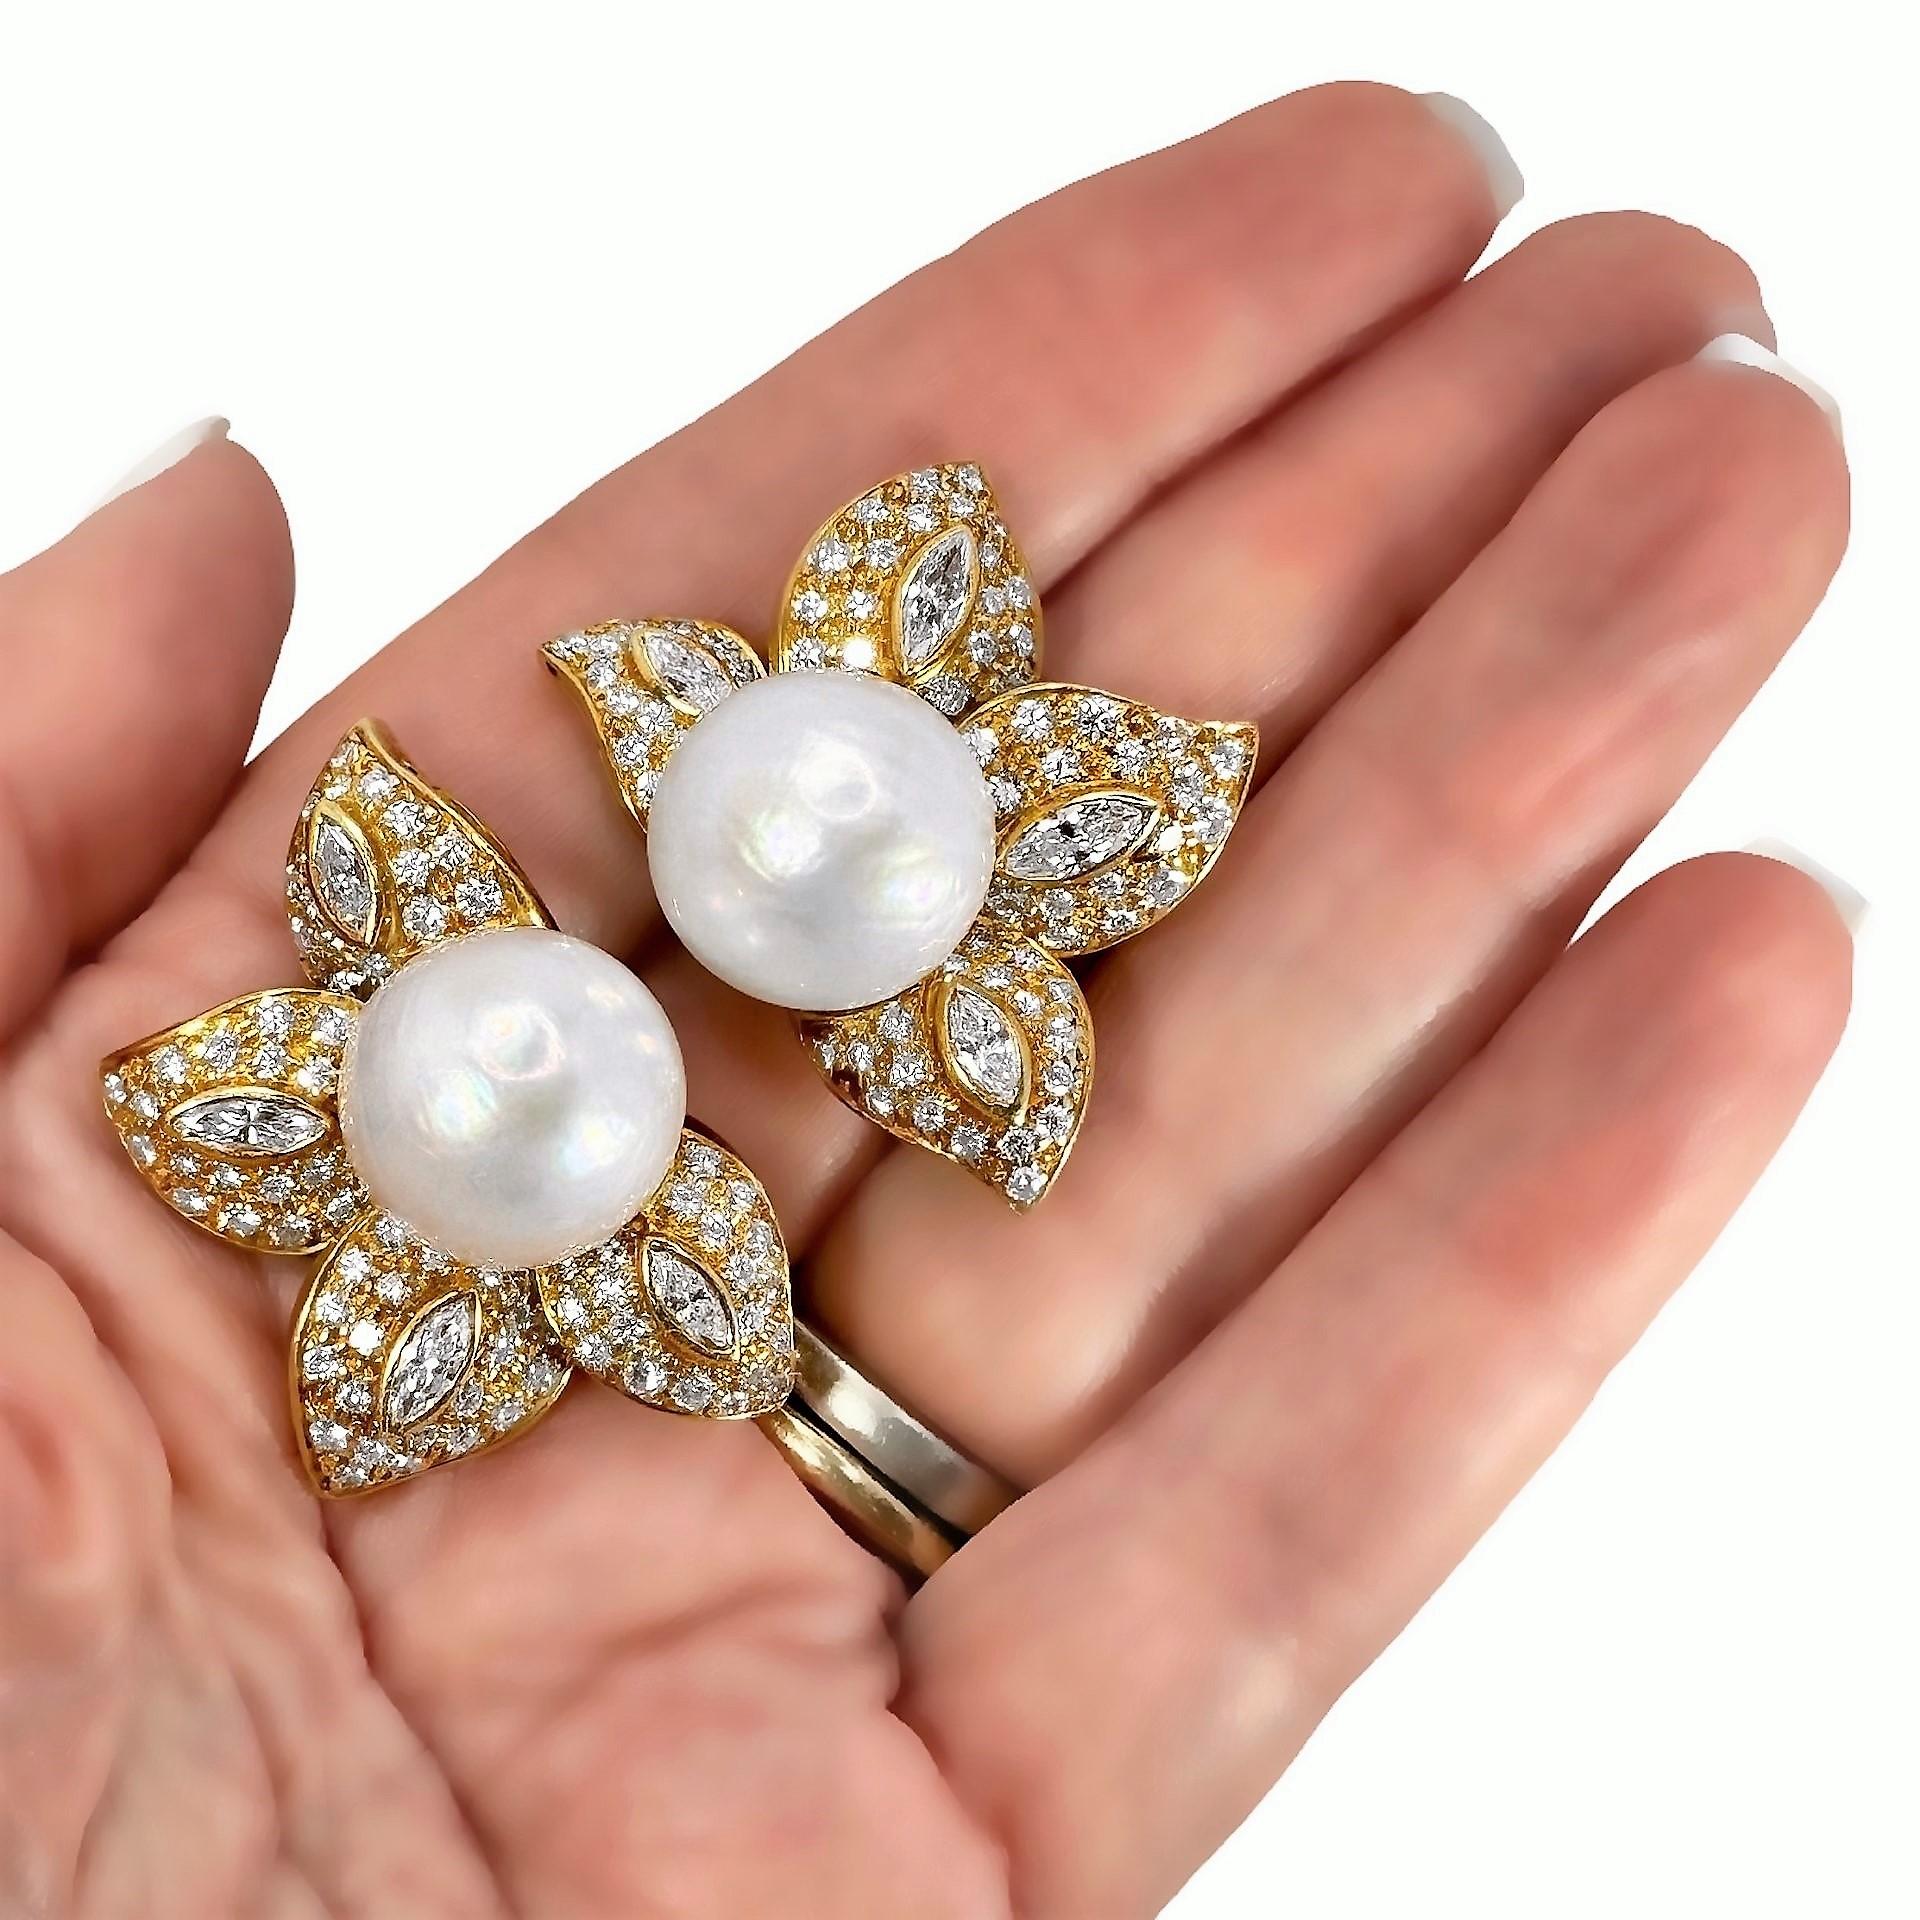 Brilliant Cut Feminine Vintage Earrings in 18k Yellow Gold, Diamonds, & South Sea Pearls For Sale